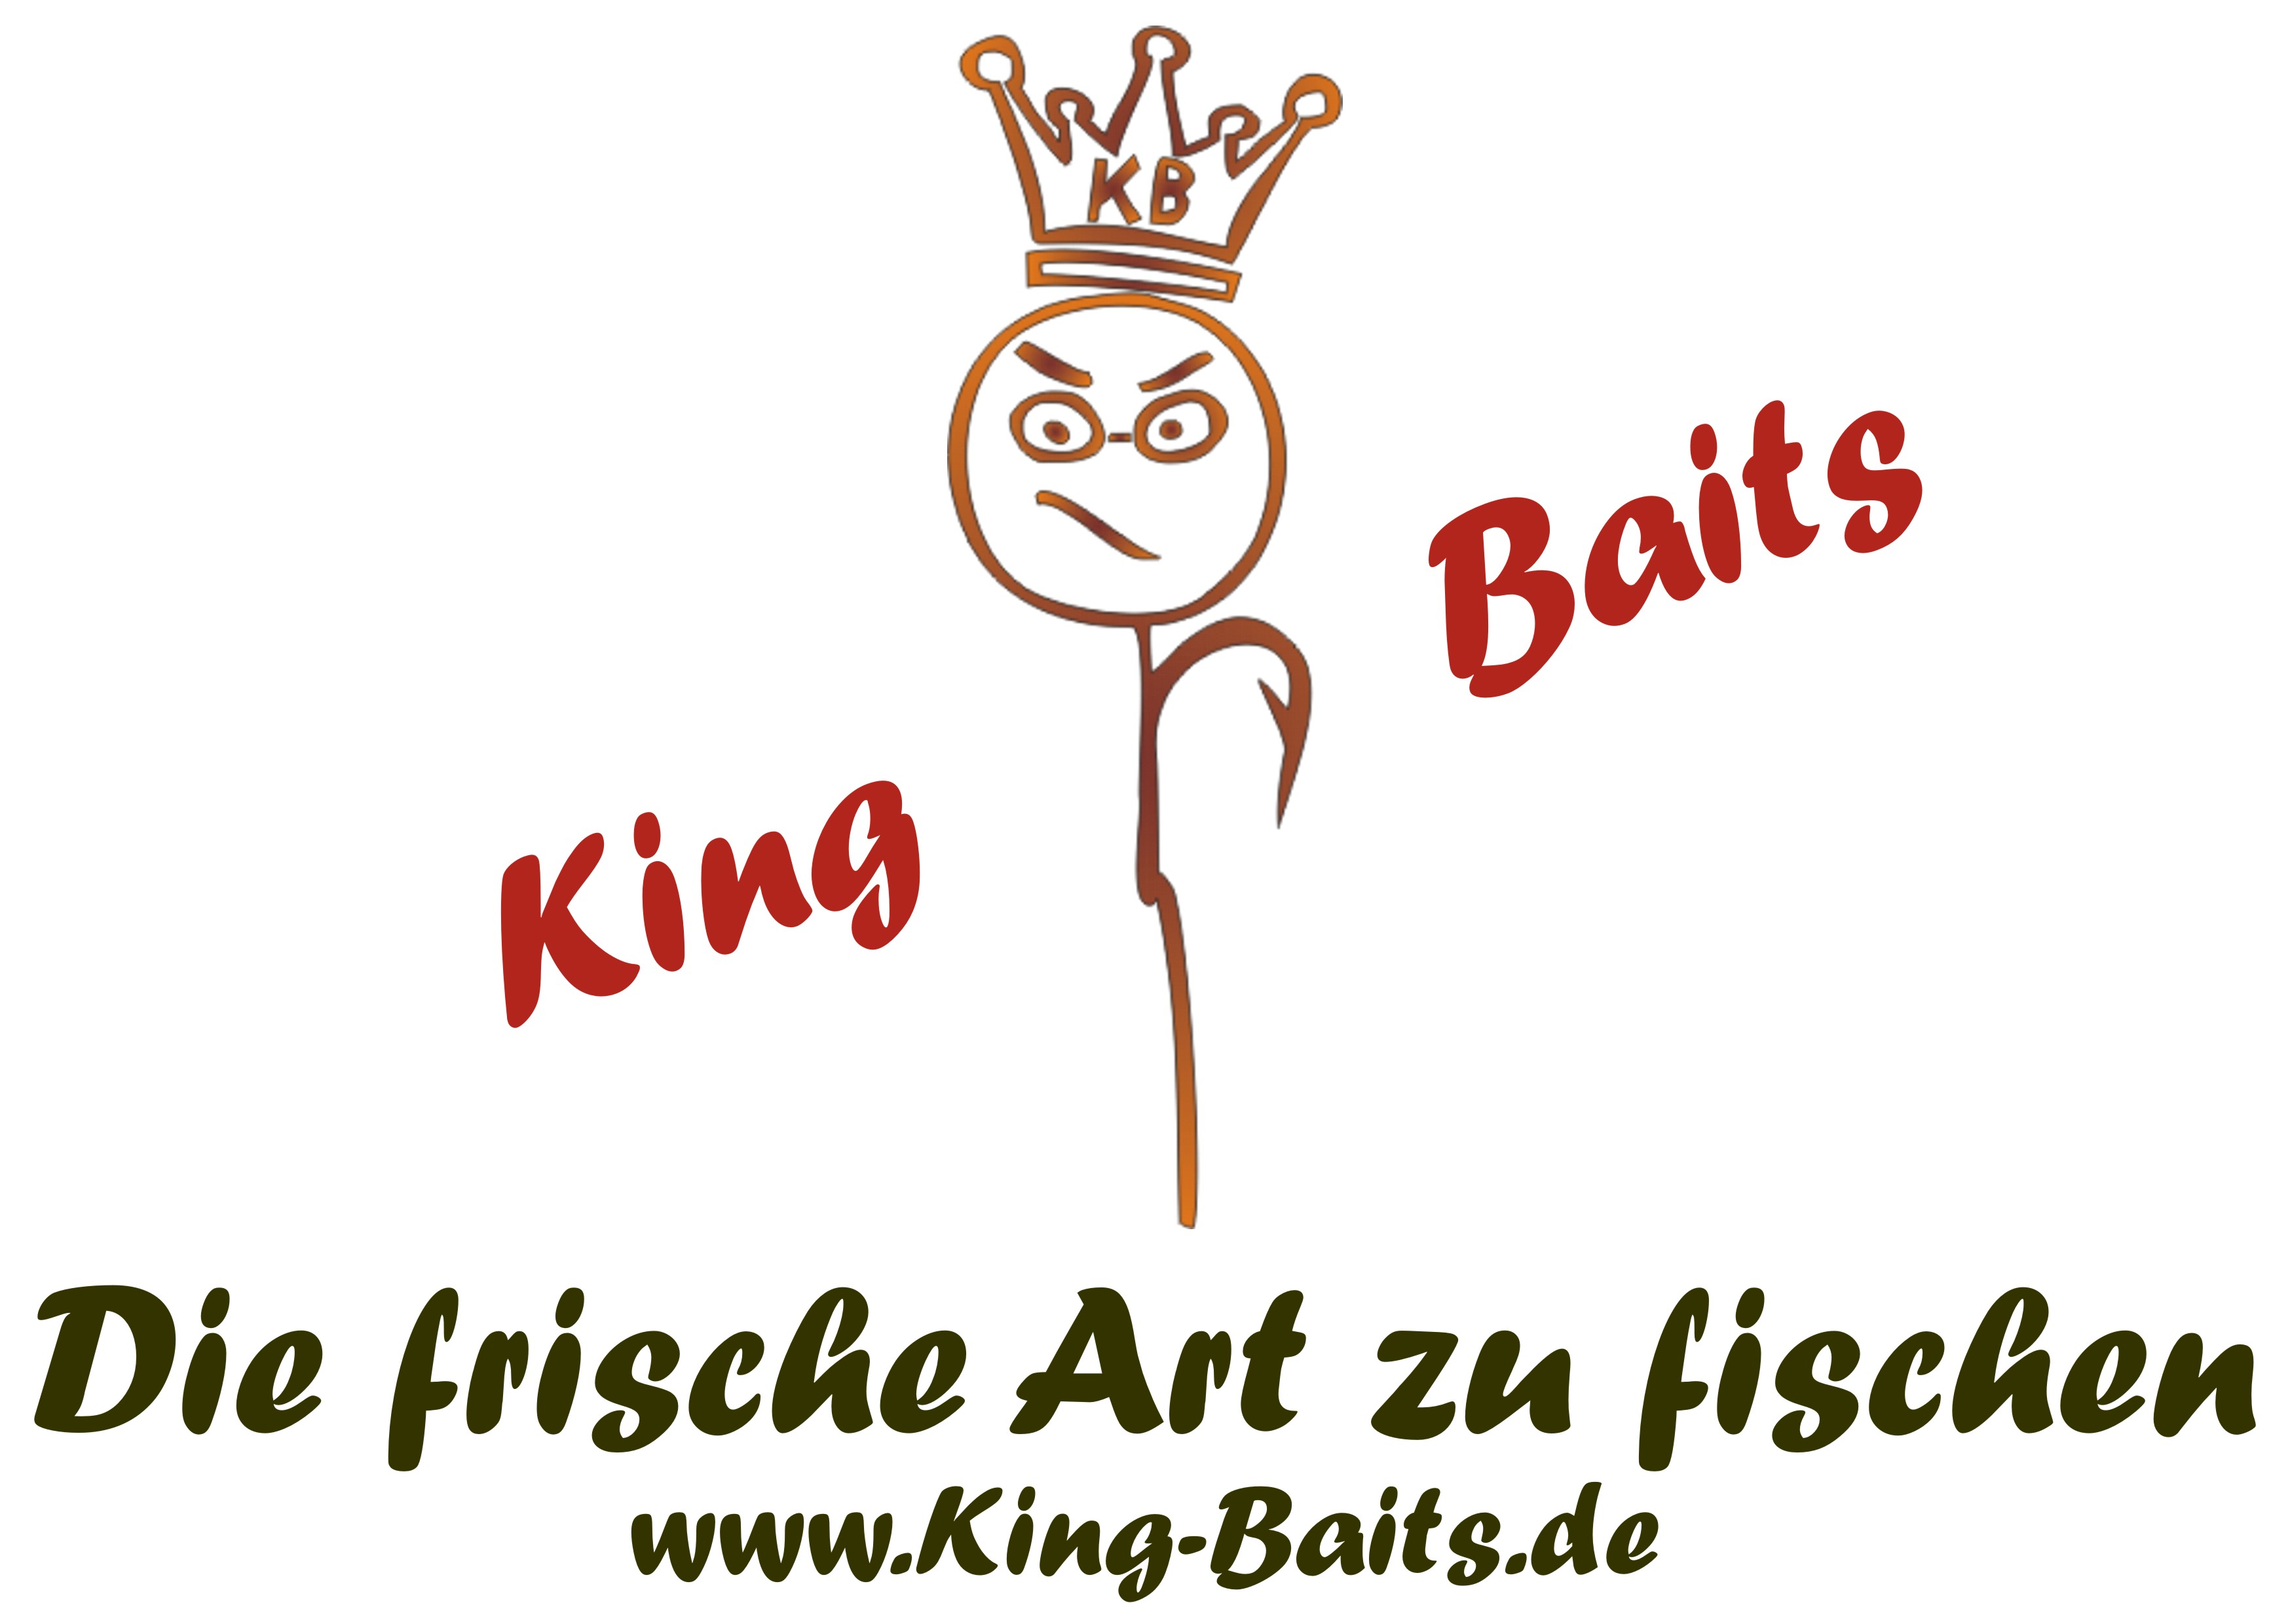 (c) King-baits.de